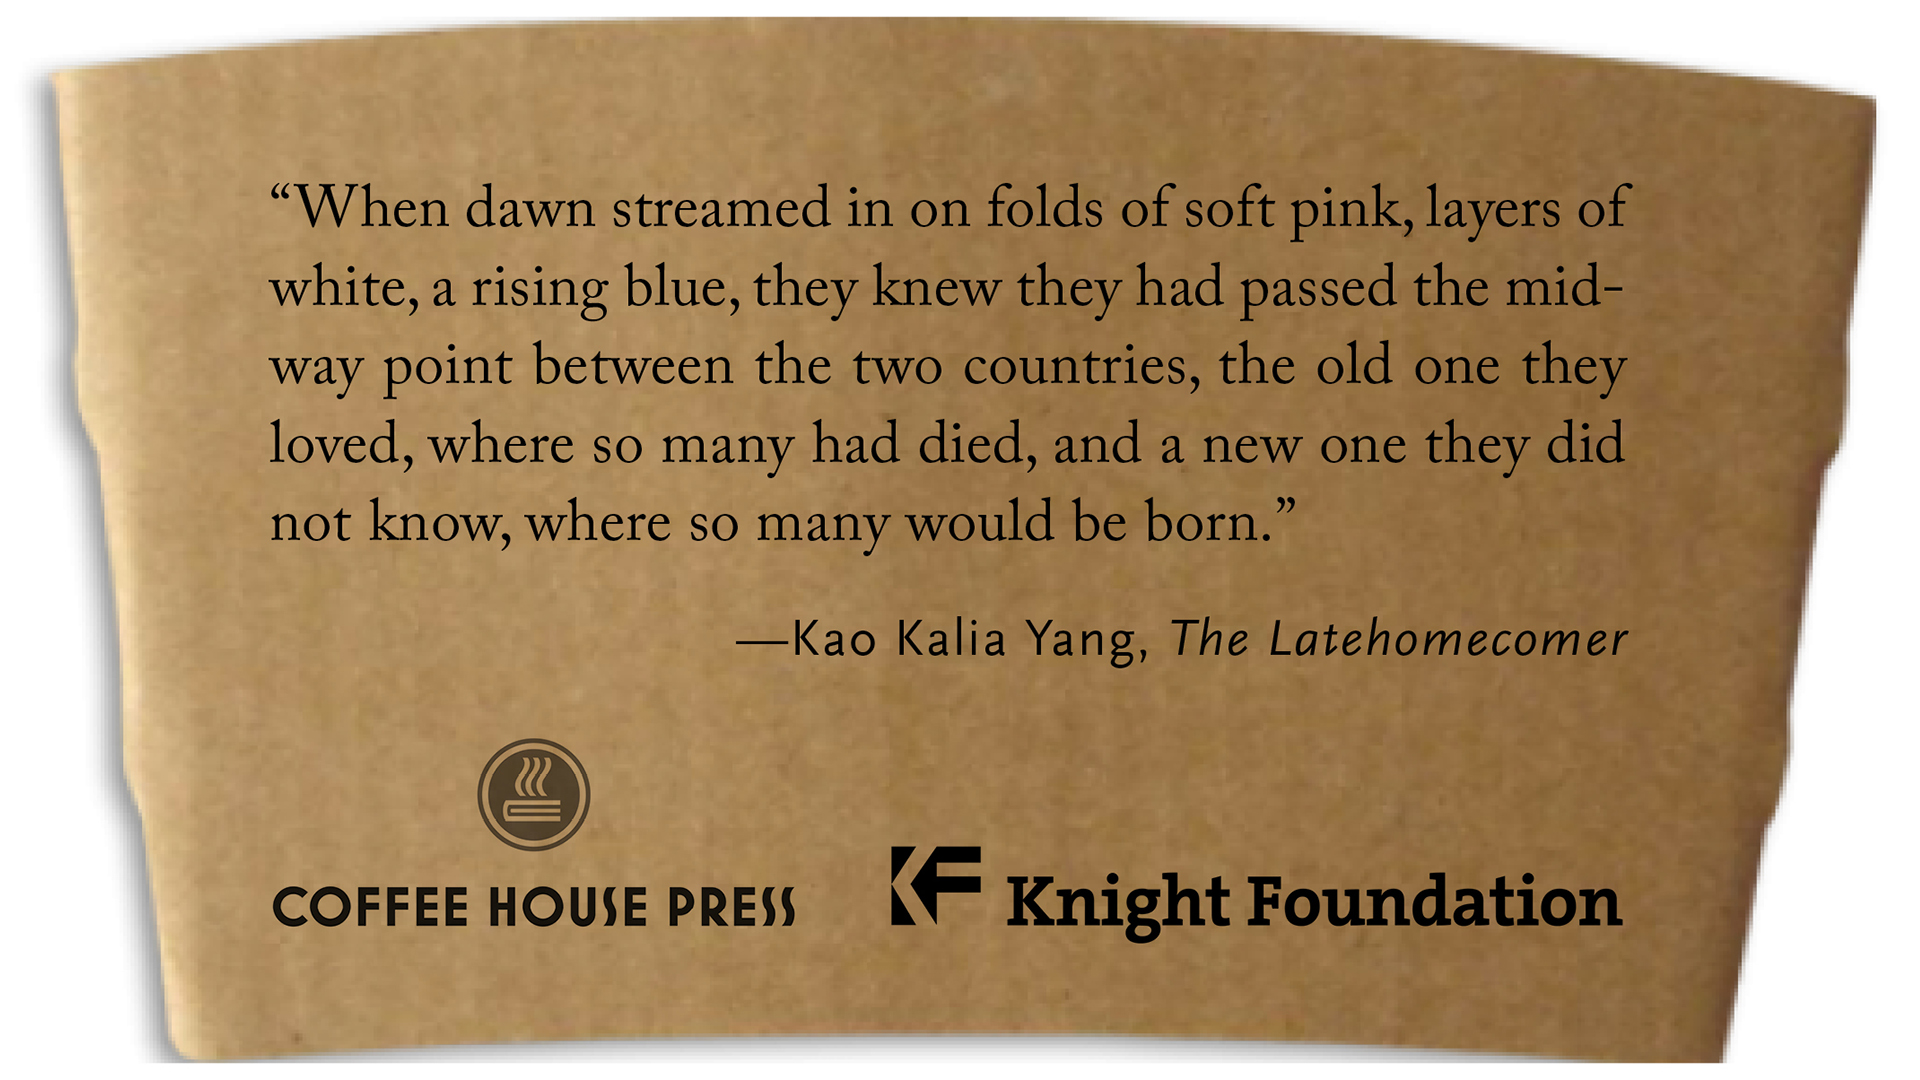 St. Paul – Knight Foundation